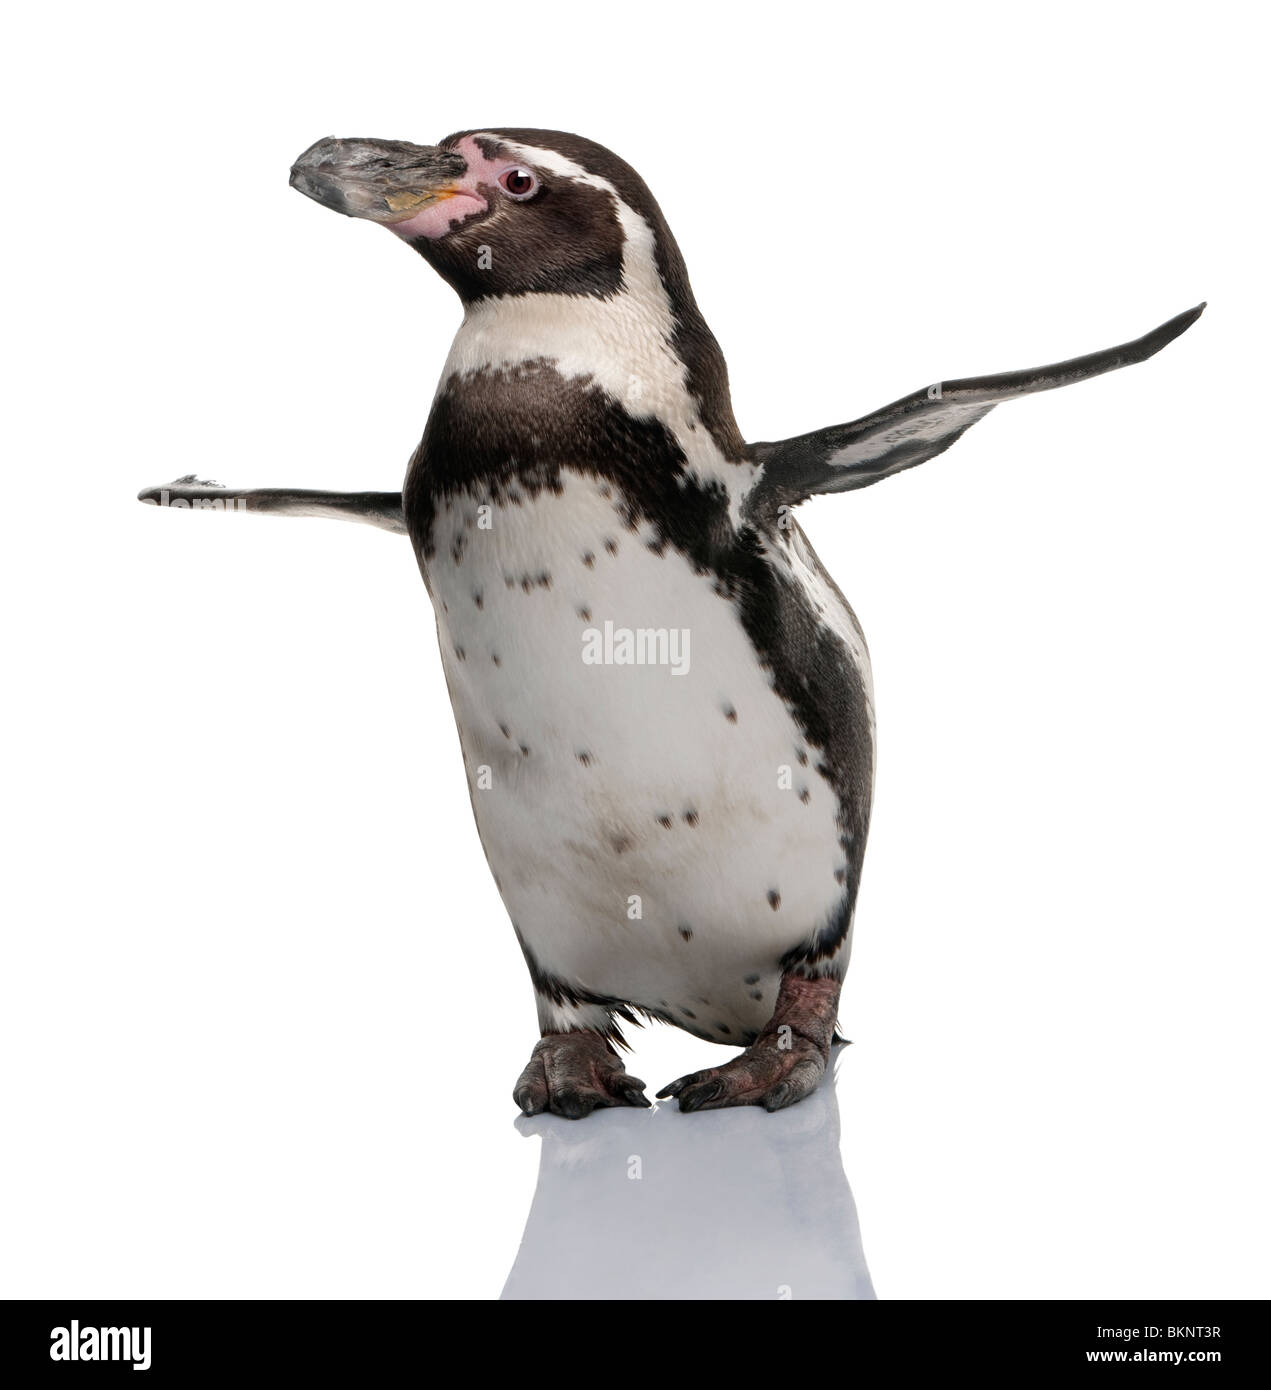 Humboldt Penguin, Spheniscus humboldti, standing in front of white background Stock Photo